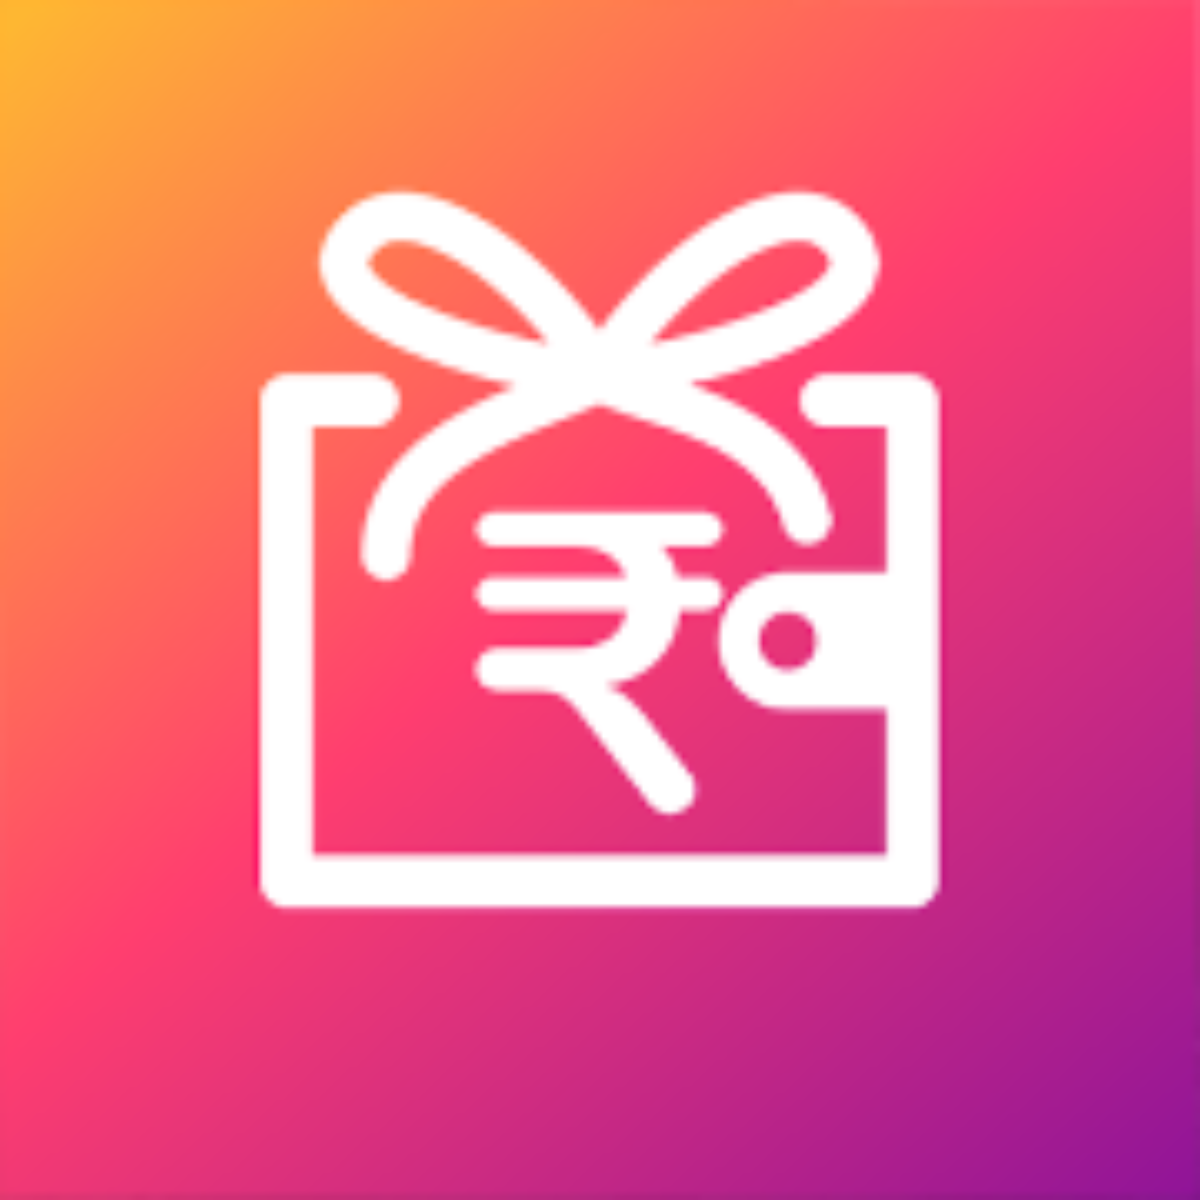 Mgamer Mod Apk Unlimited Money Credits V1 9 5 Download For Android